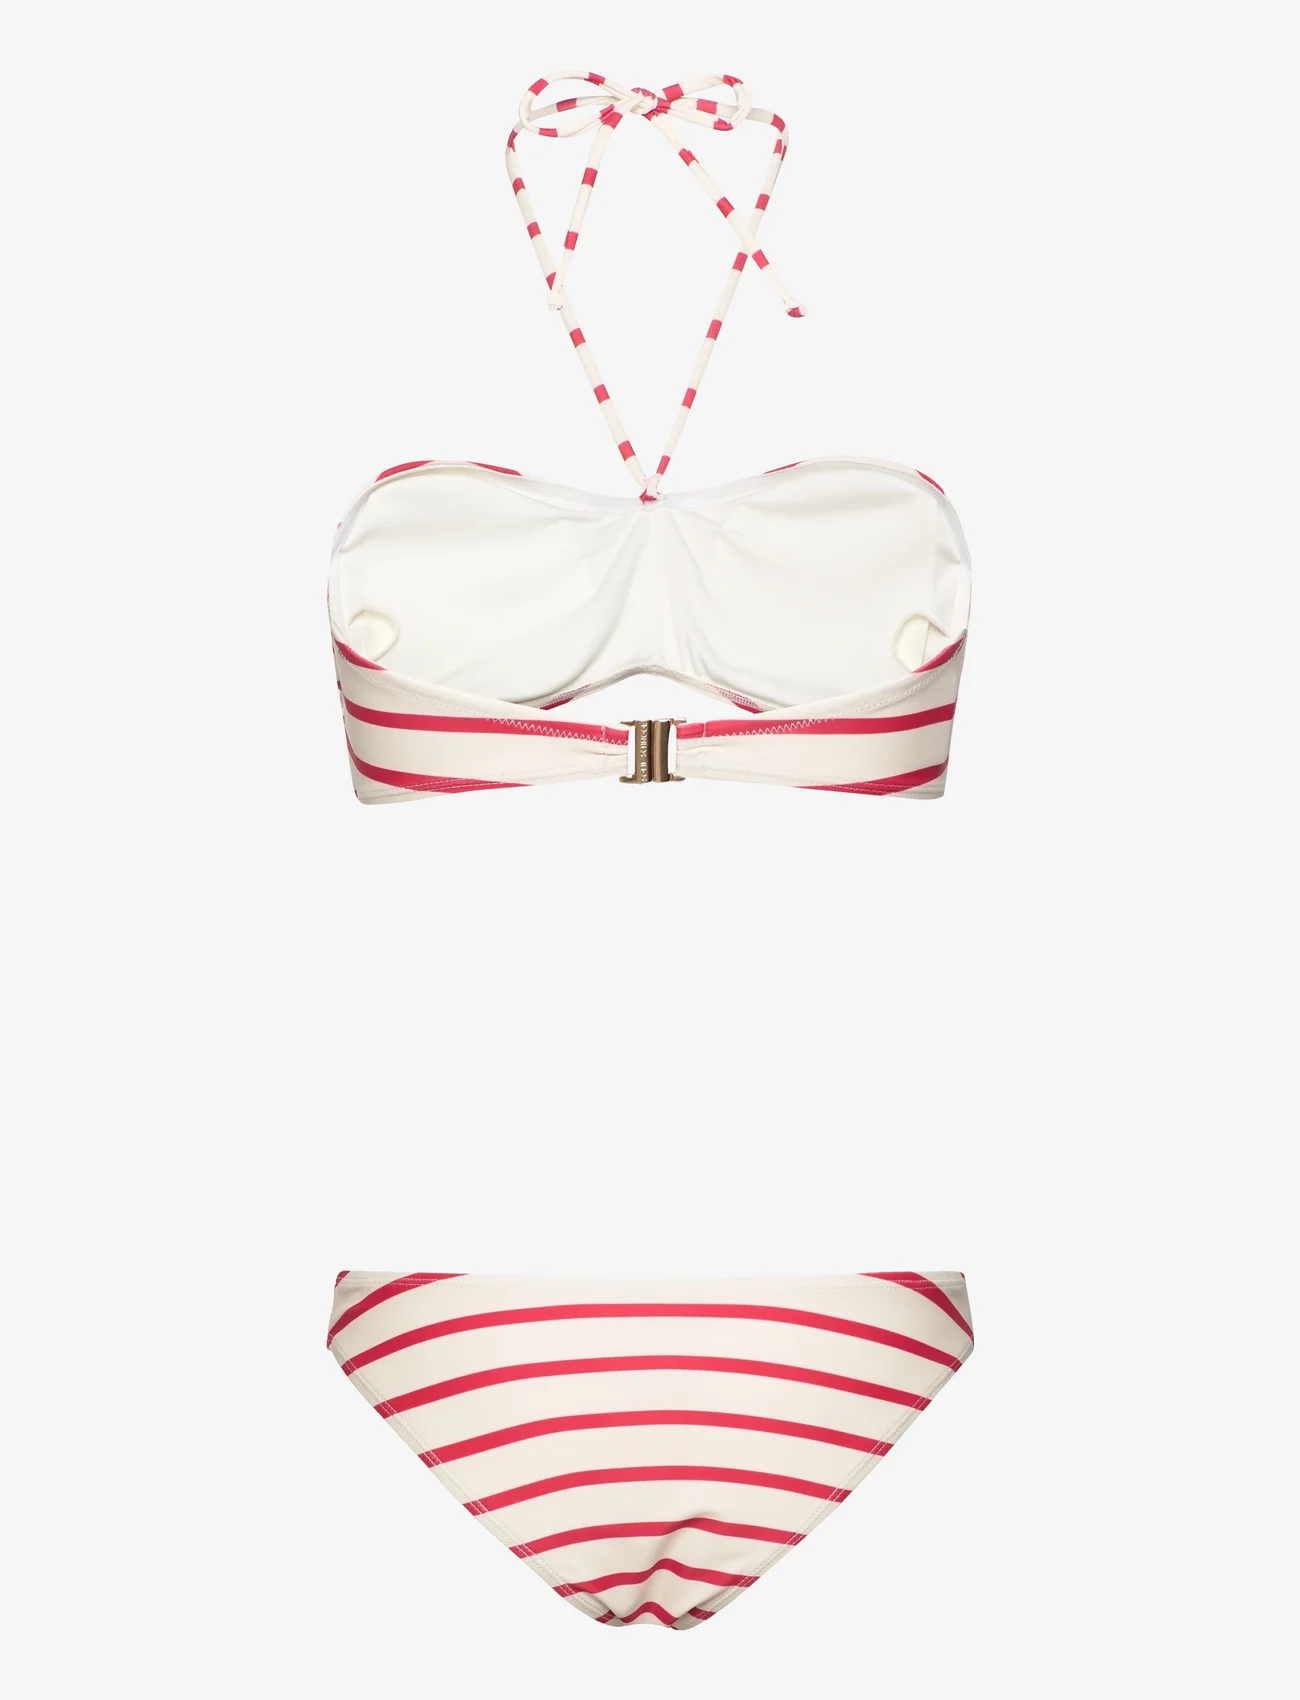 Sofie Schnoor - Bikini - bikini-sett - red striped - 1